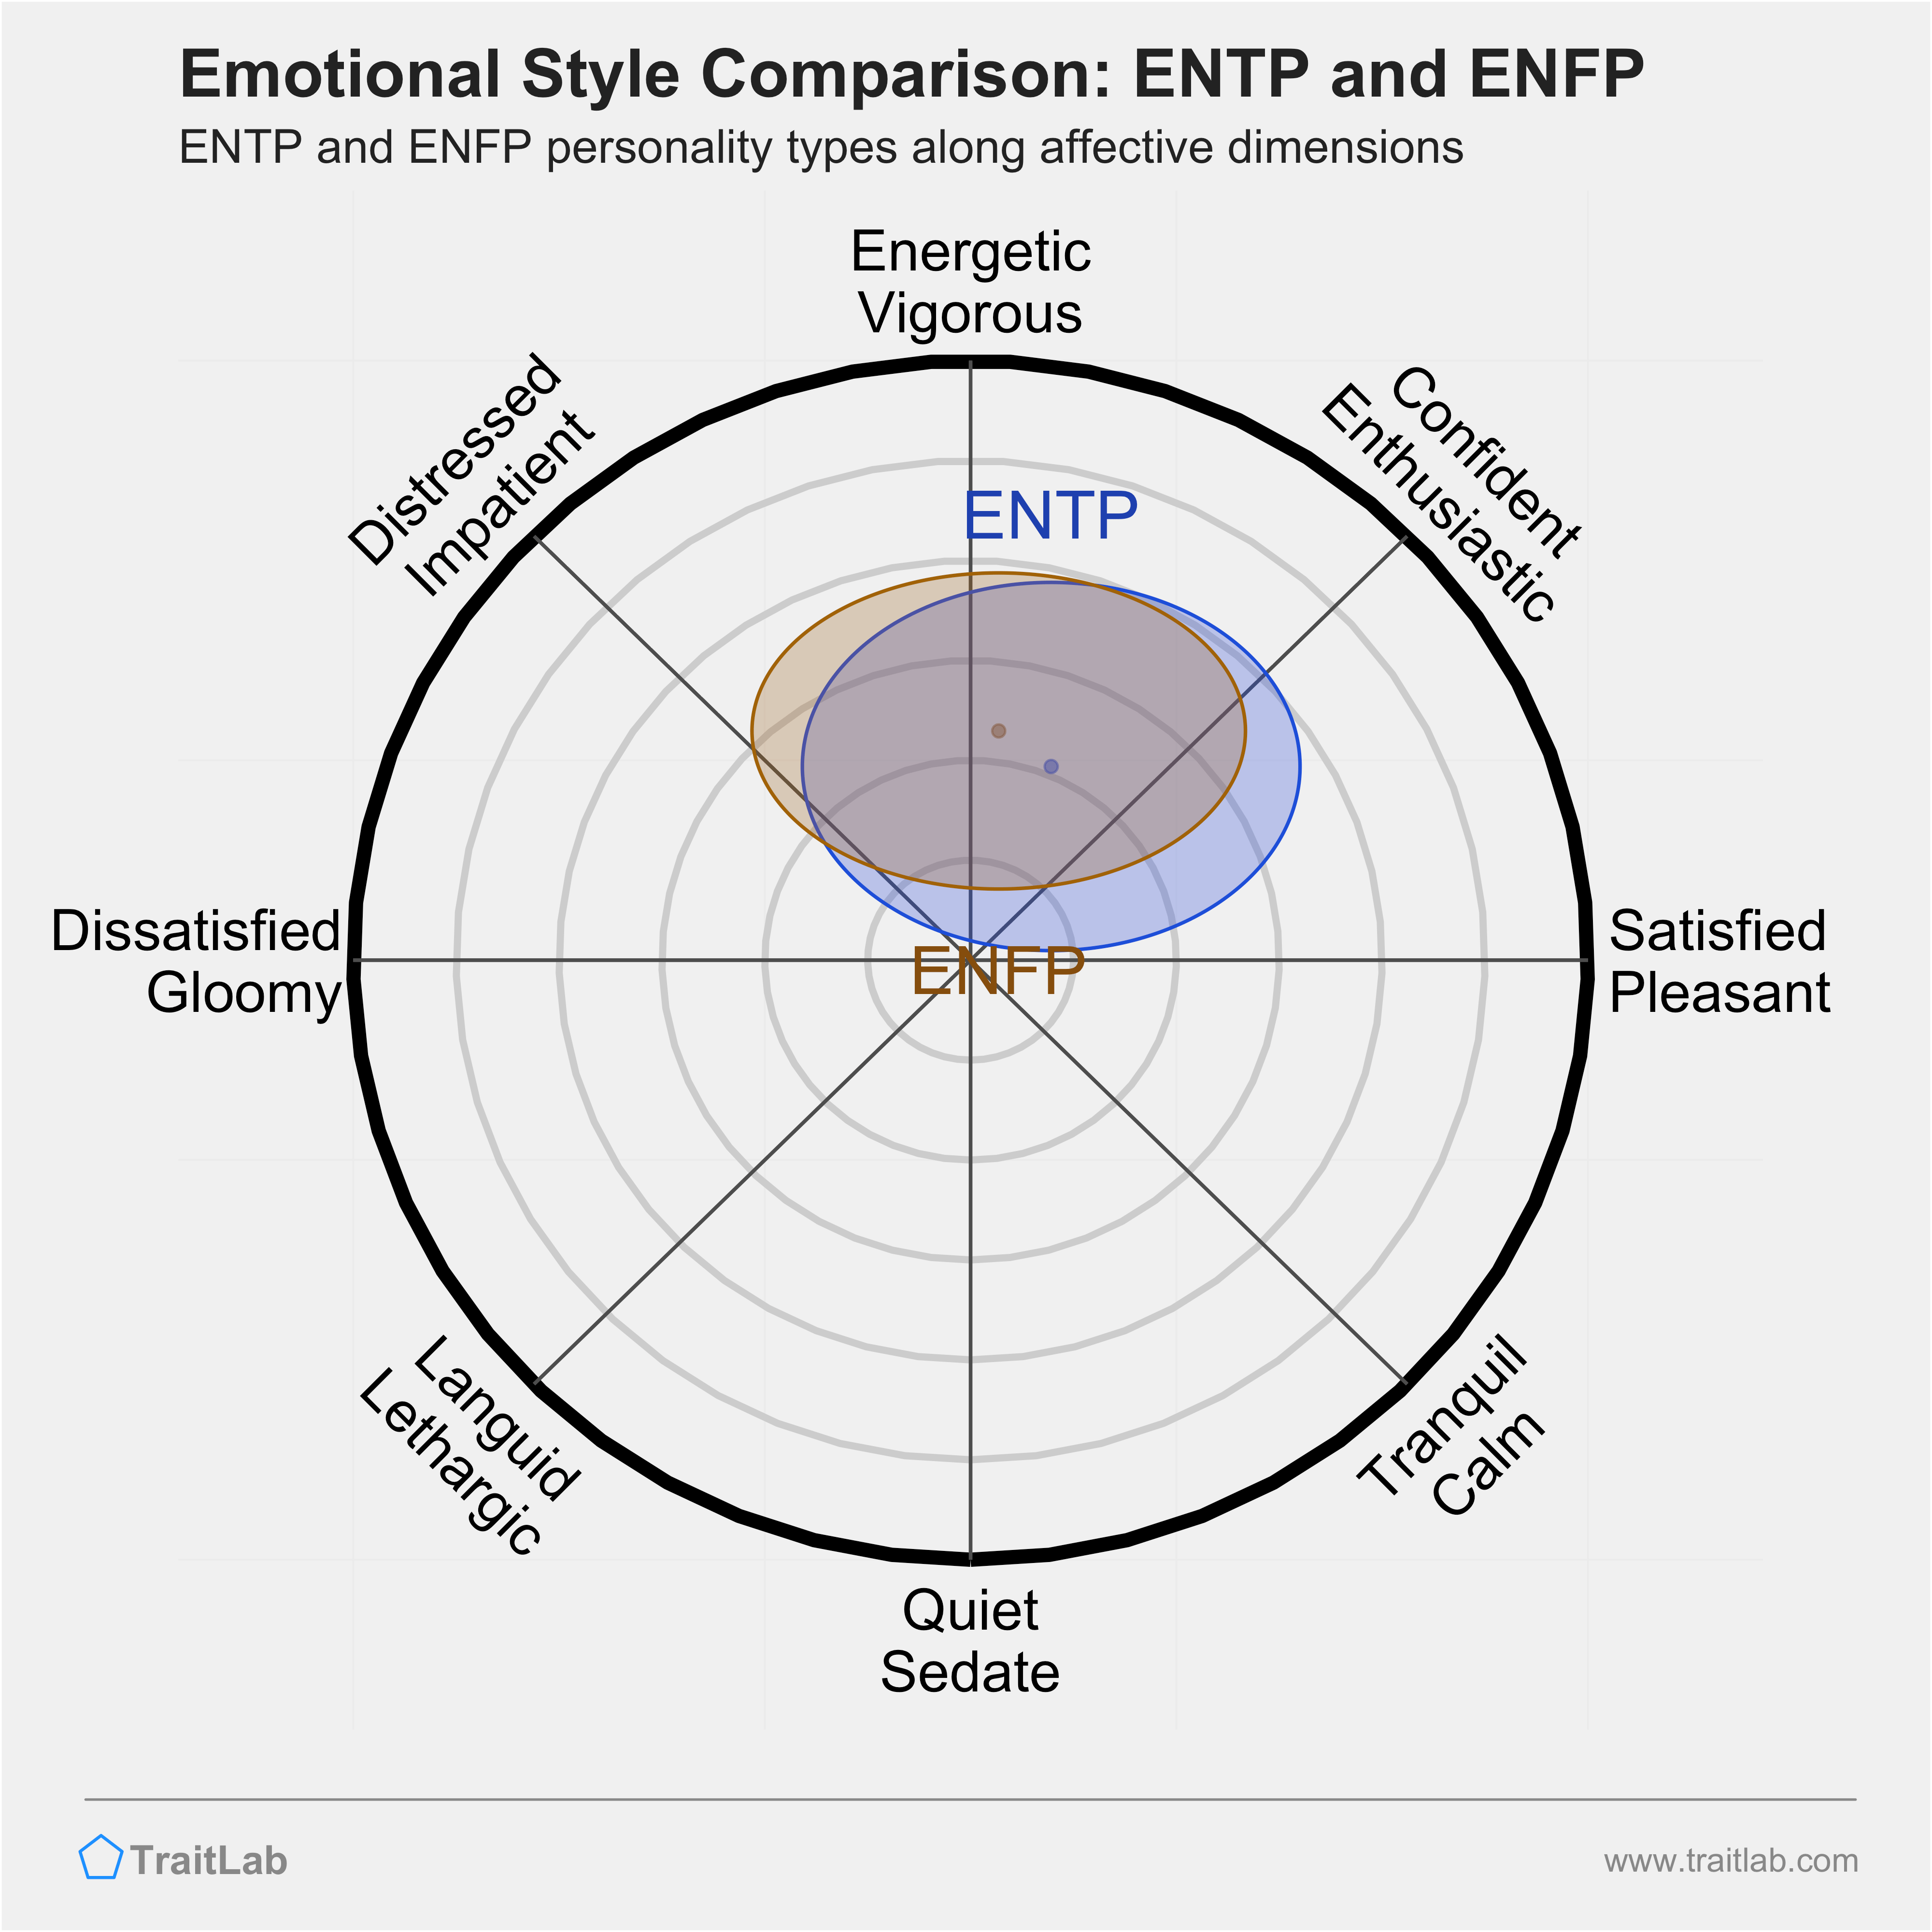 ENTP and ENFP comparison across emotional (affective) dimensions